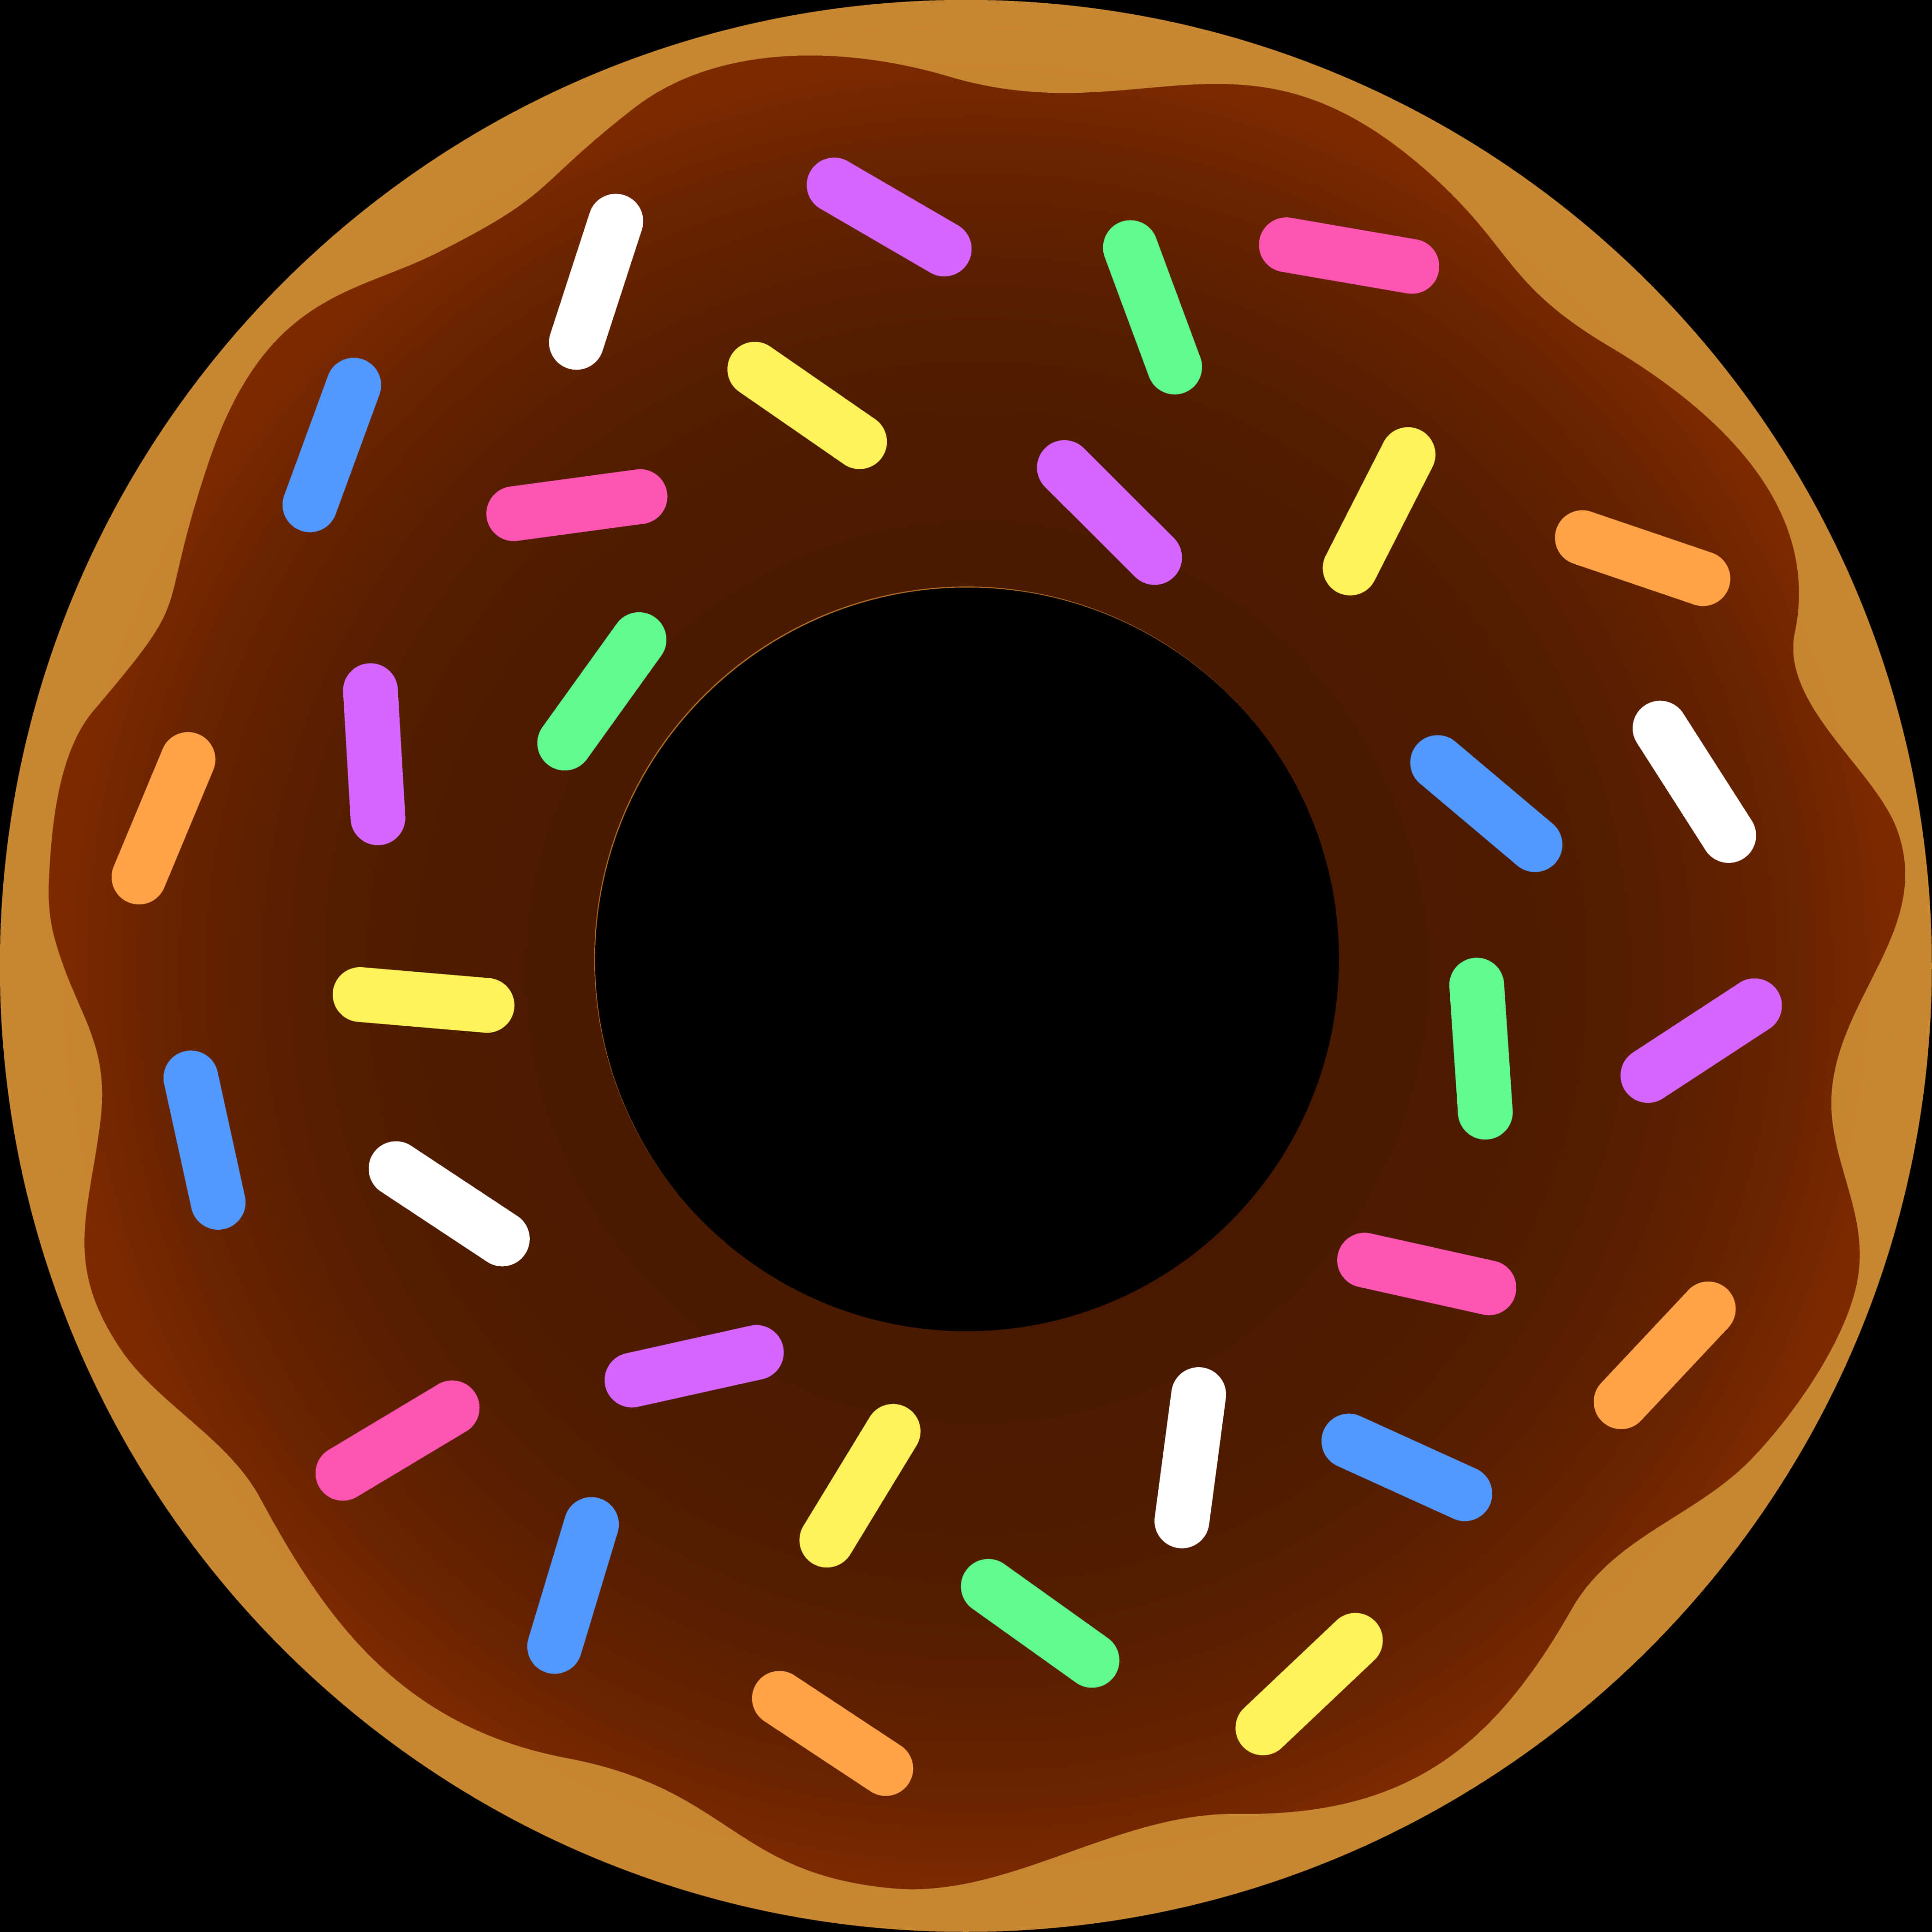 Chocolate Sprinkled Donut Illustration